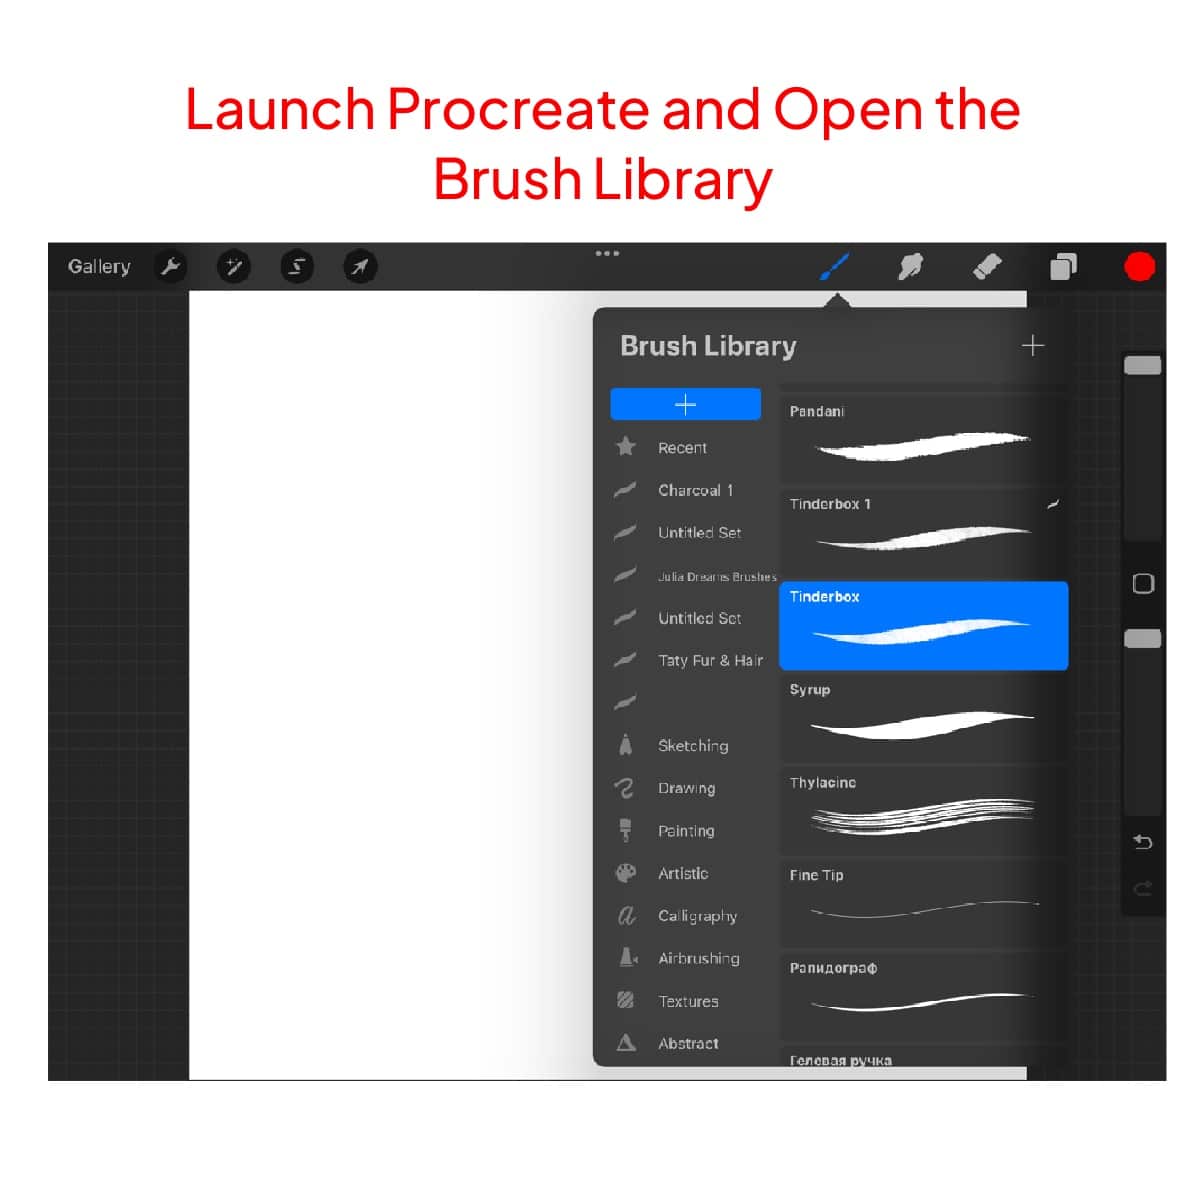 Opening brush library